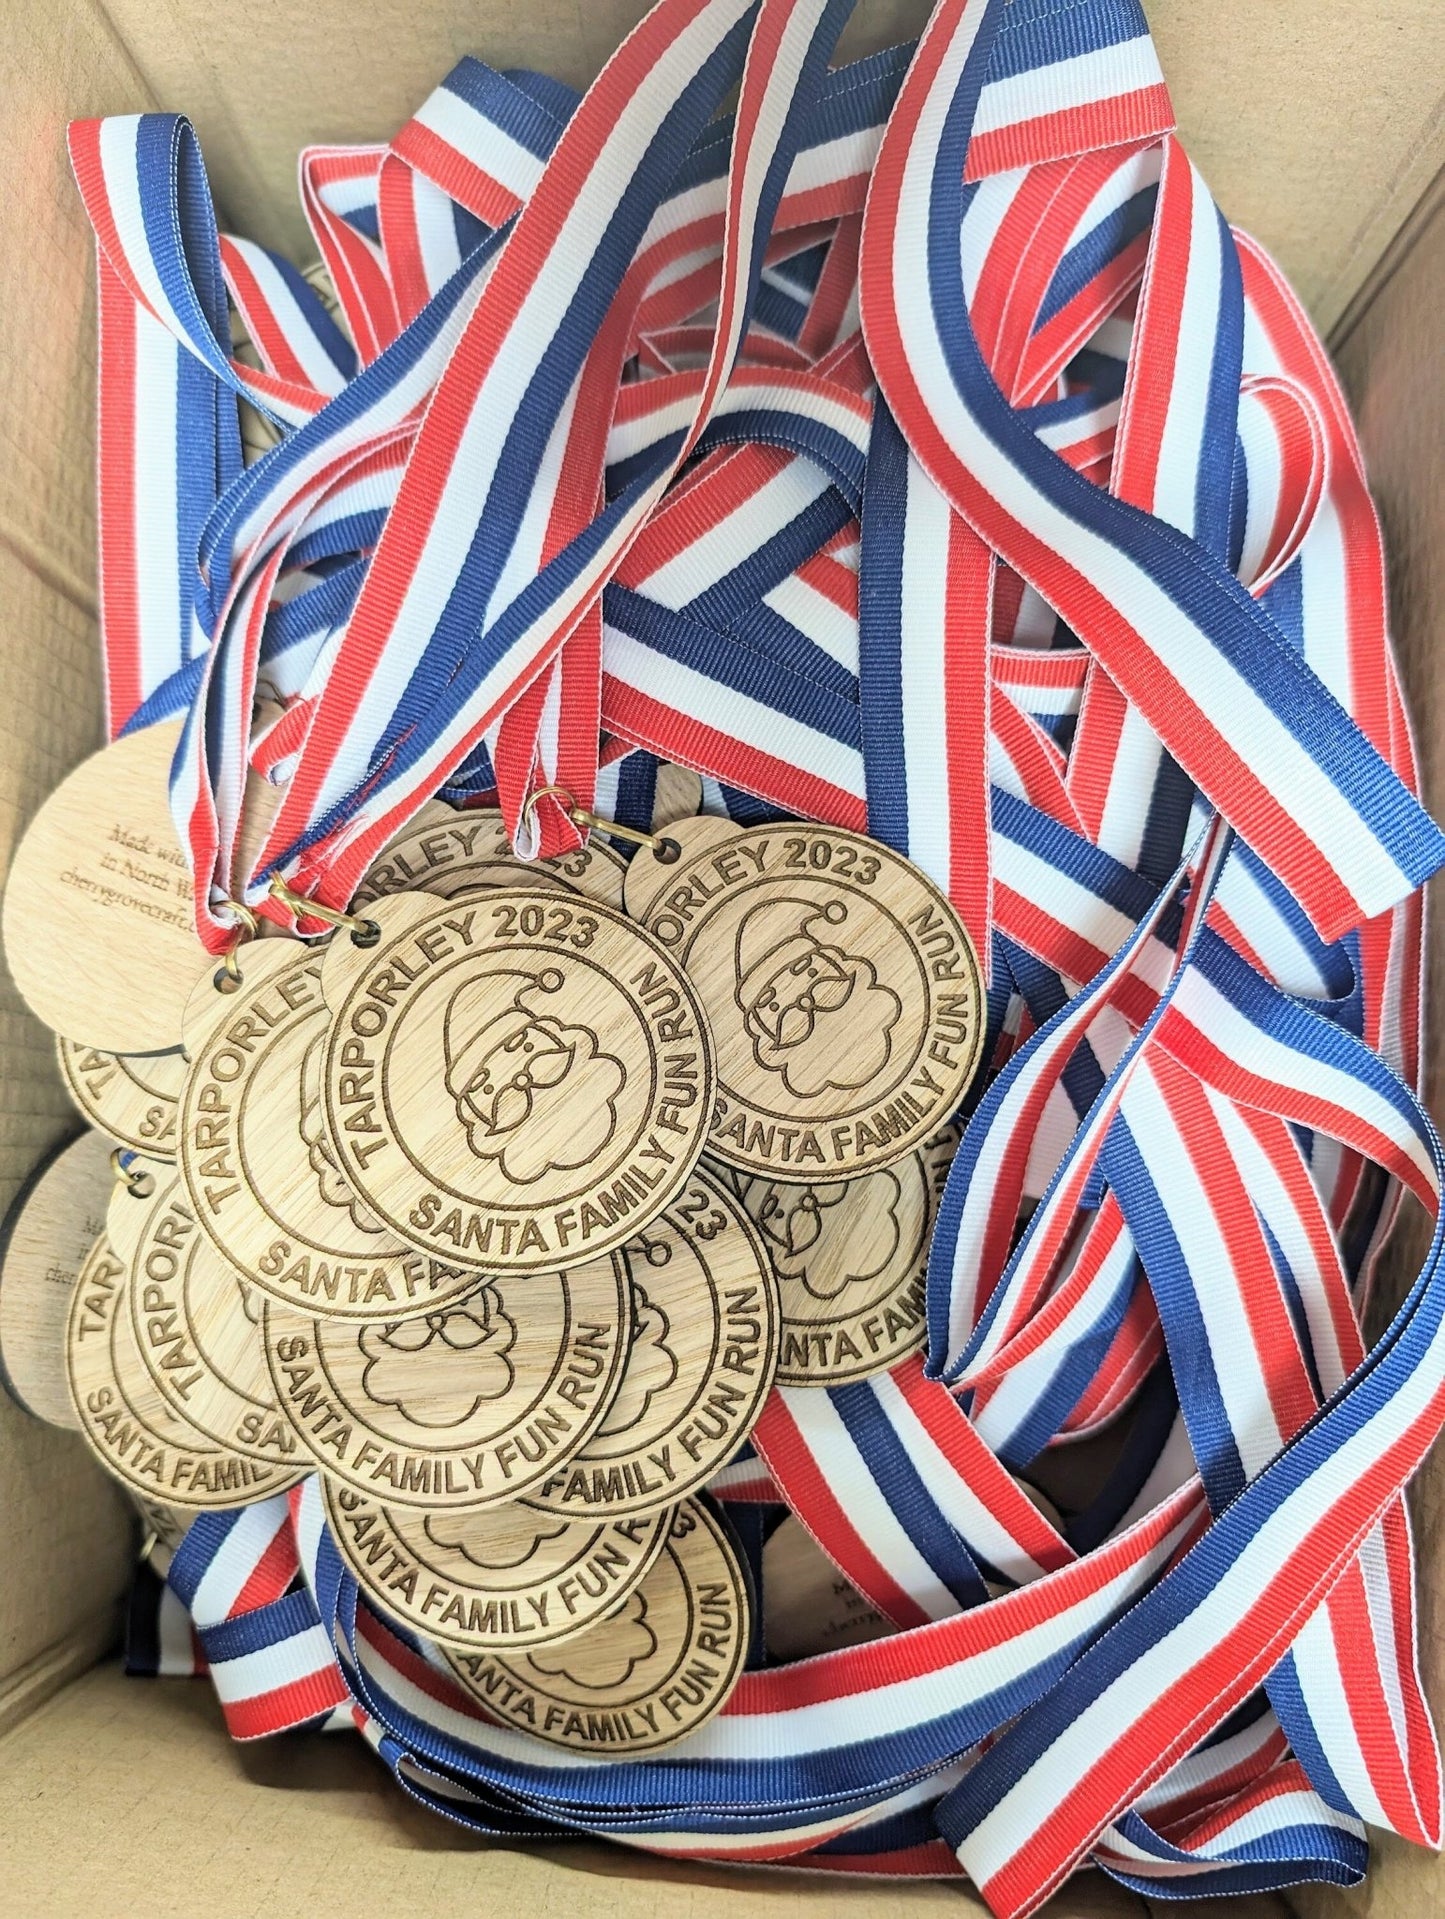 Personalised Wooden Medals for Village Fun Runs & Santa Dashes – Custom Event Awards - CherryGroveCraft